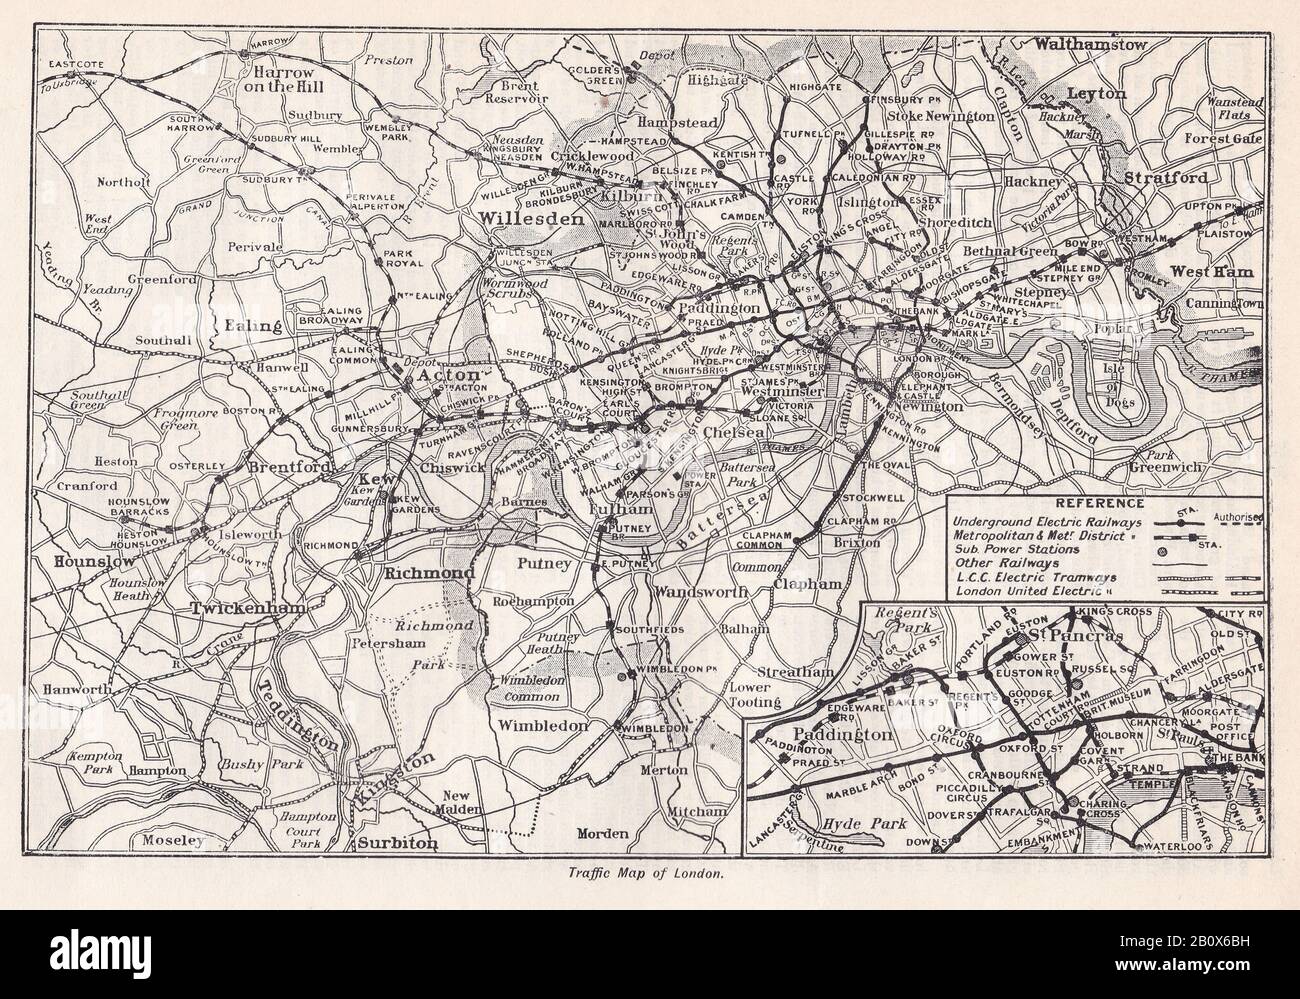 Vintage Traffic Map of London 1900s - Showing underground electric railway, Metropolitan and Met District, L.C.C. Electric Tramway and London Electric. Stock Photo